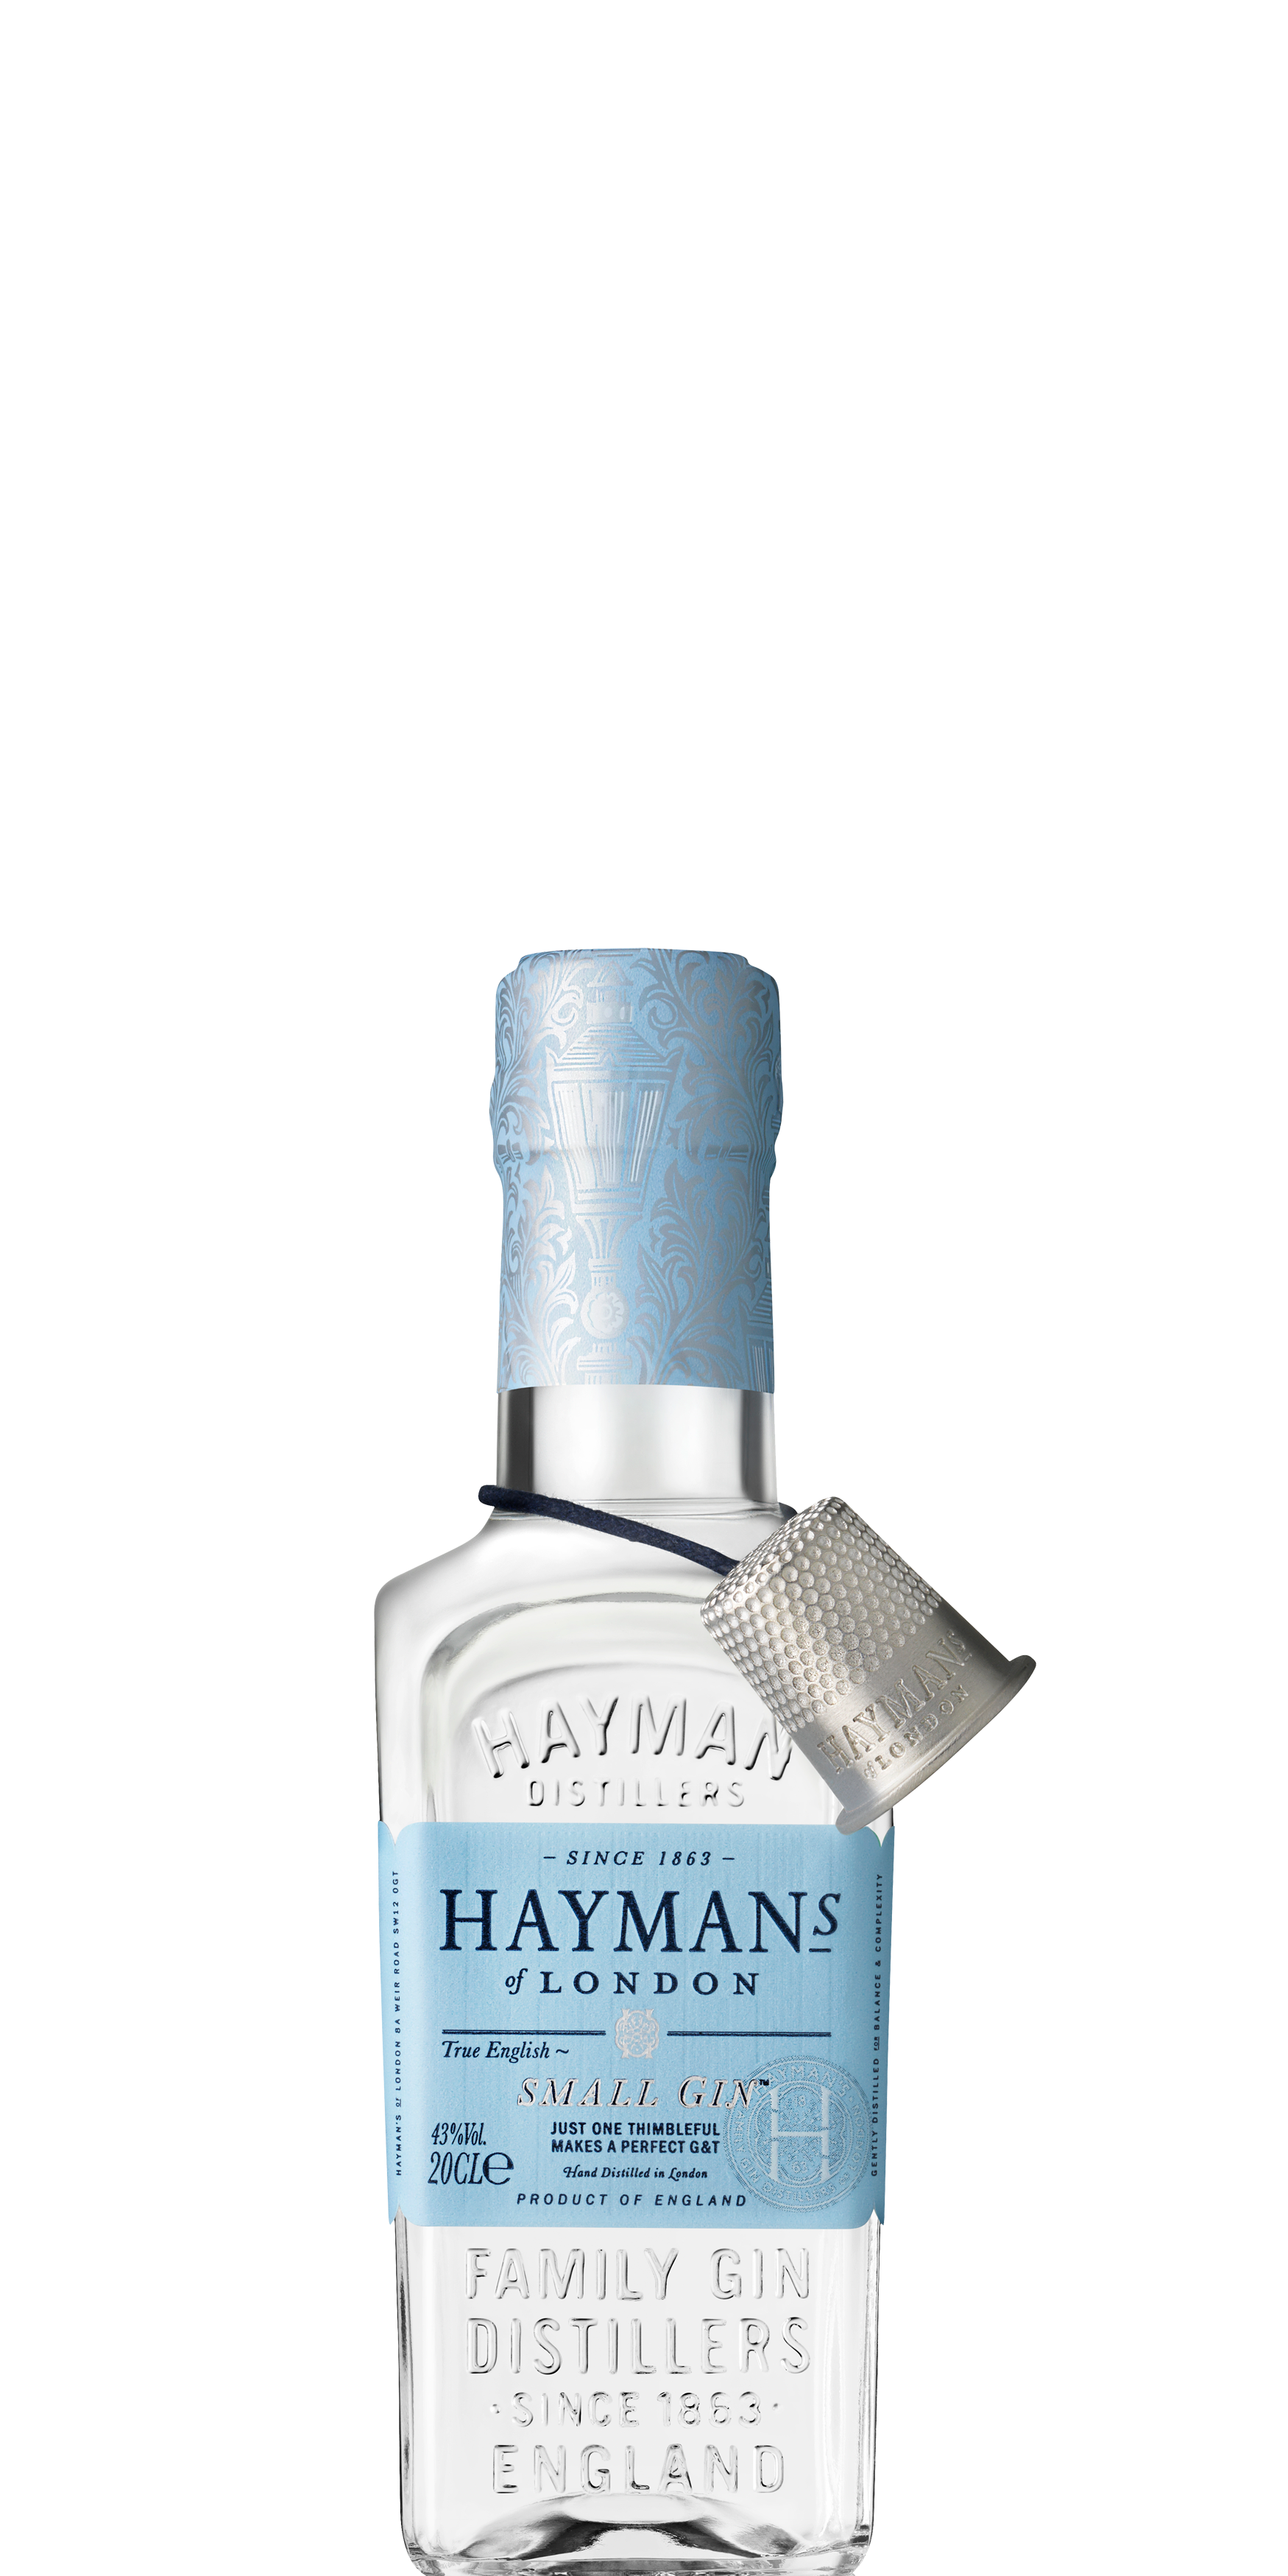 Haymans-true-english-small-gin-200ml.png